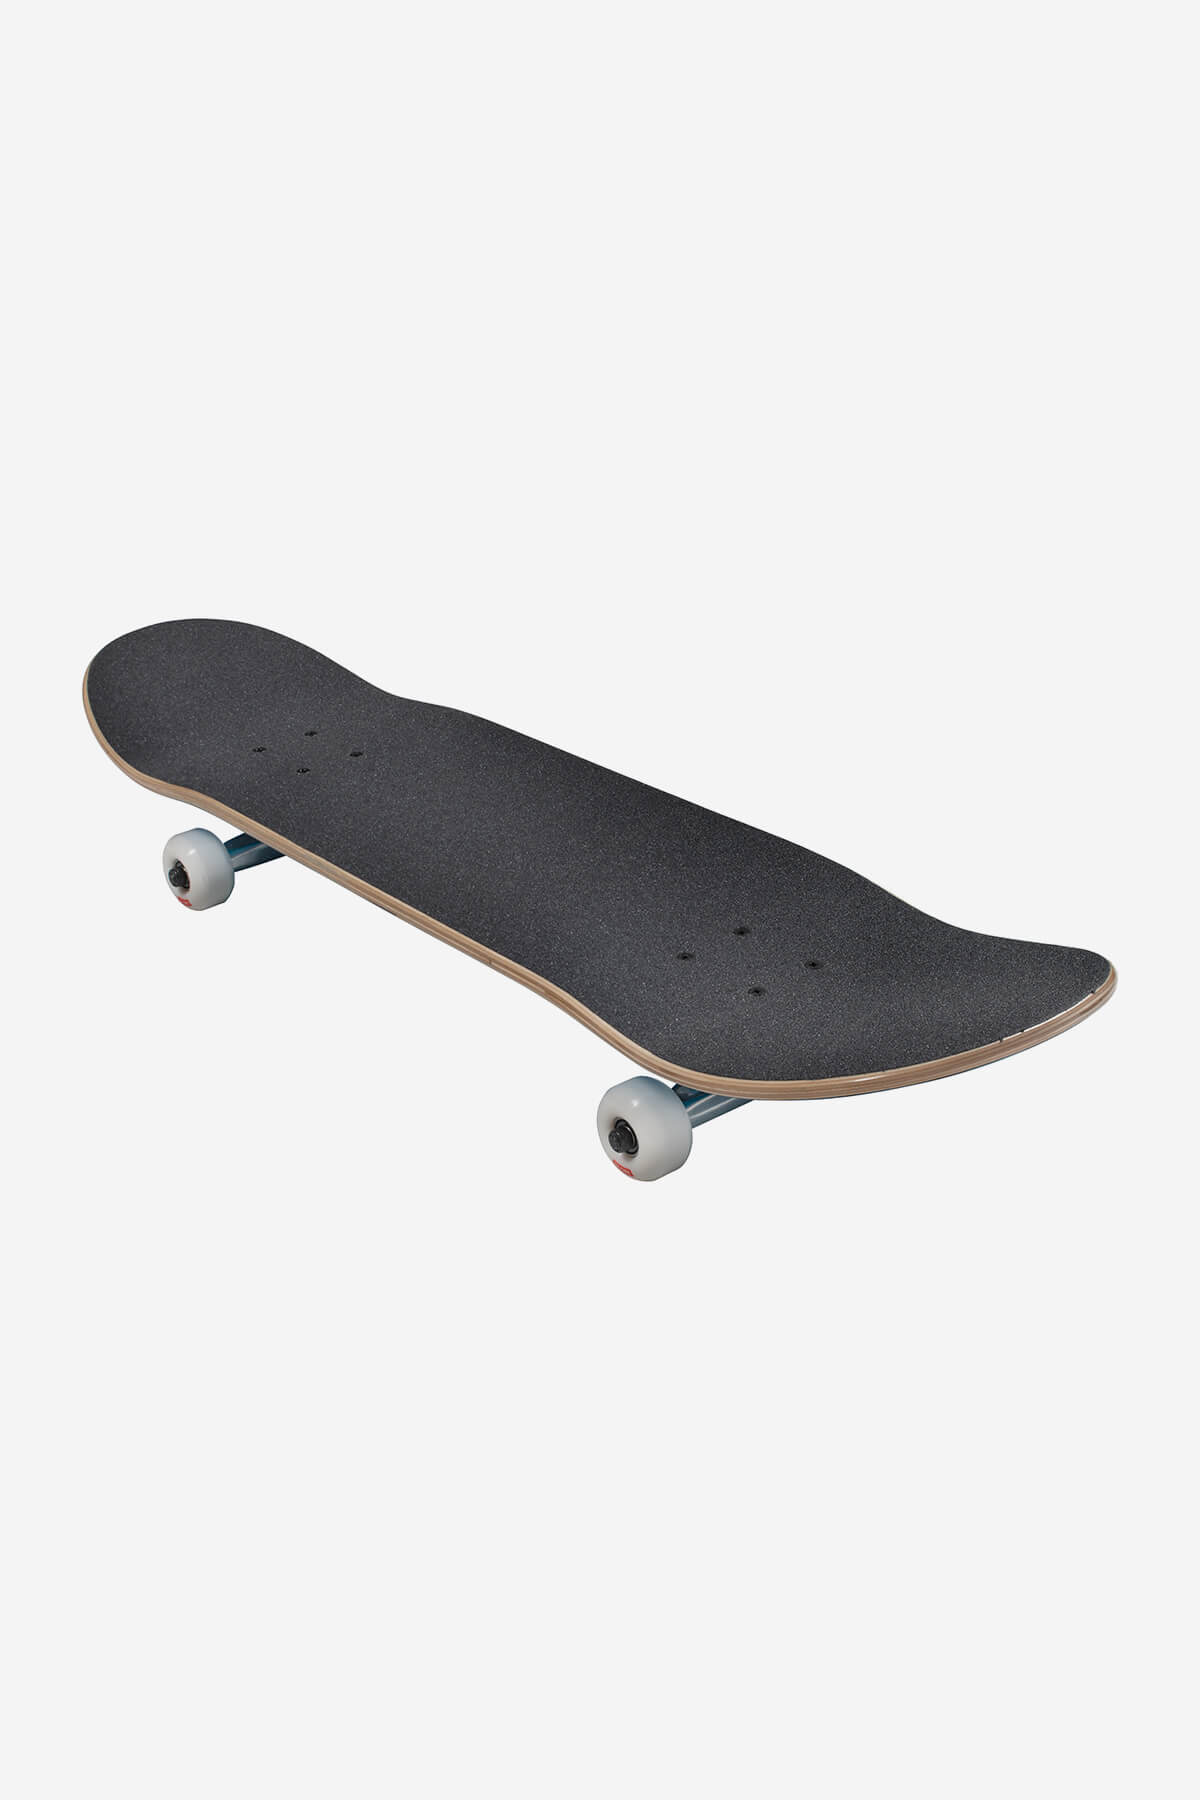 bestiame neon blue 8,375" completo skateboard